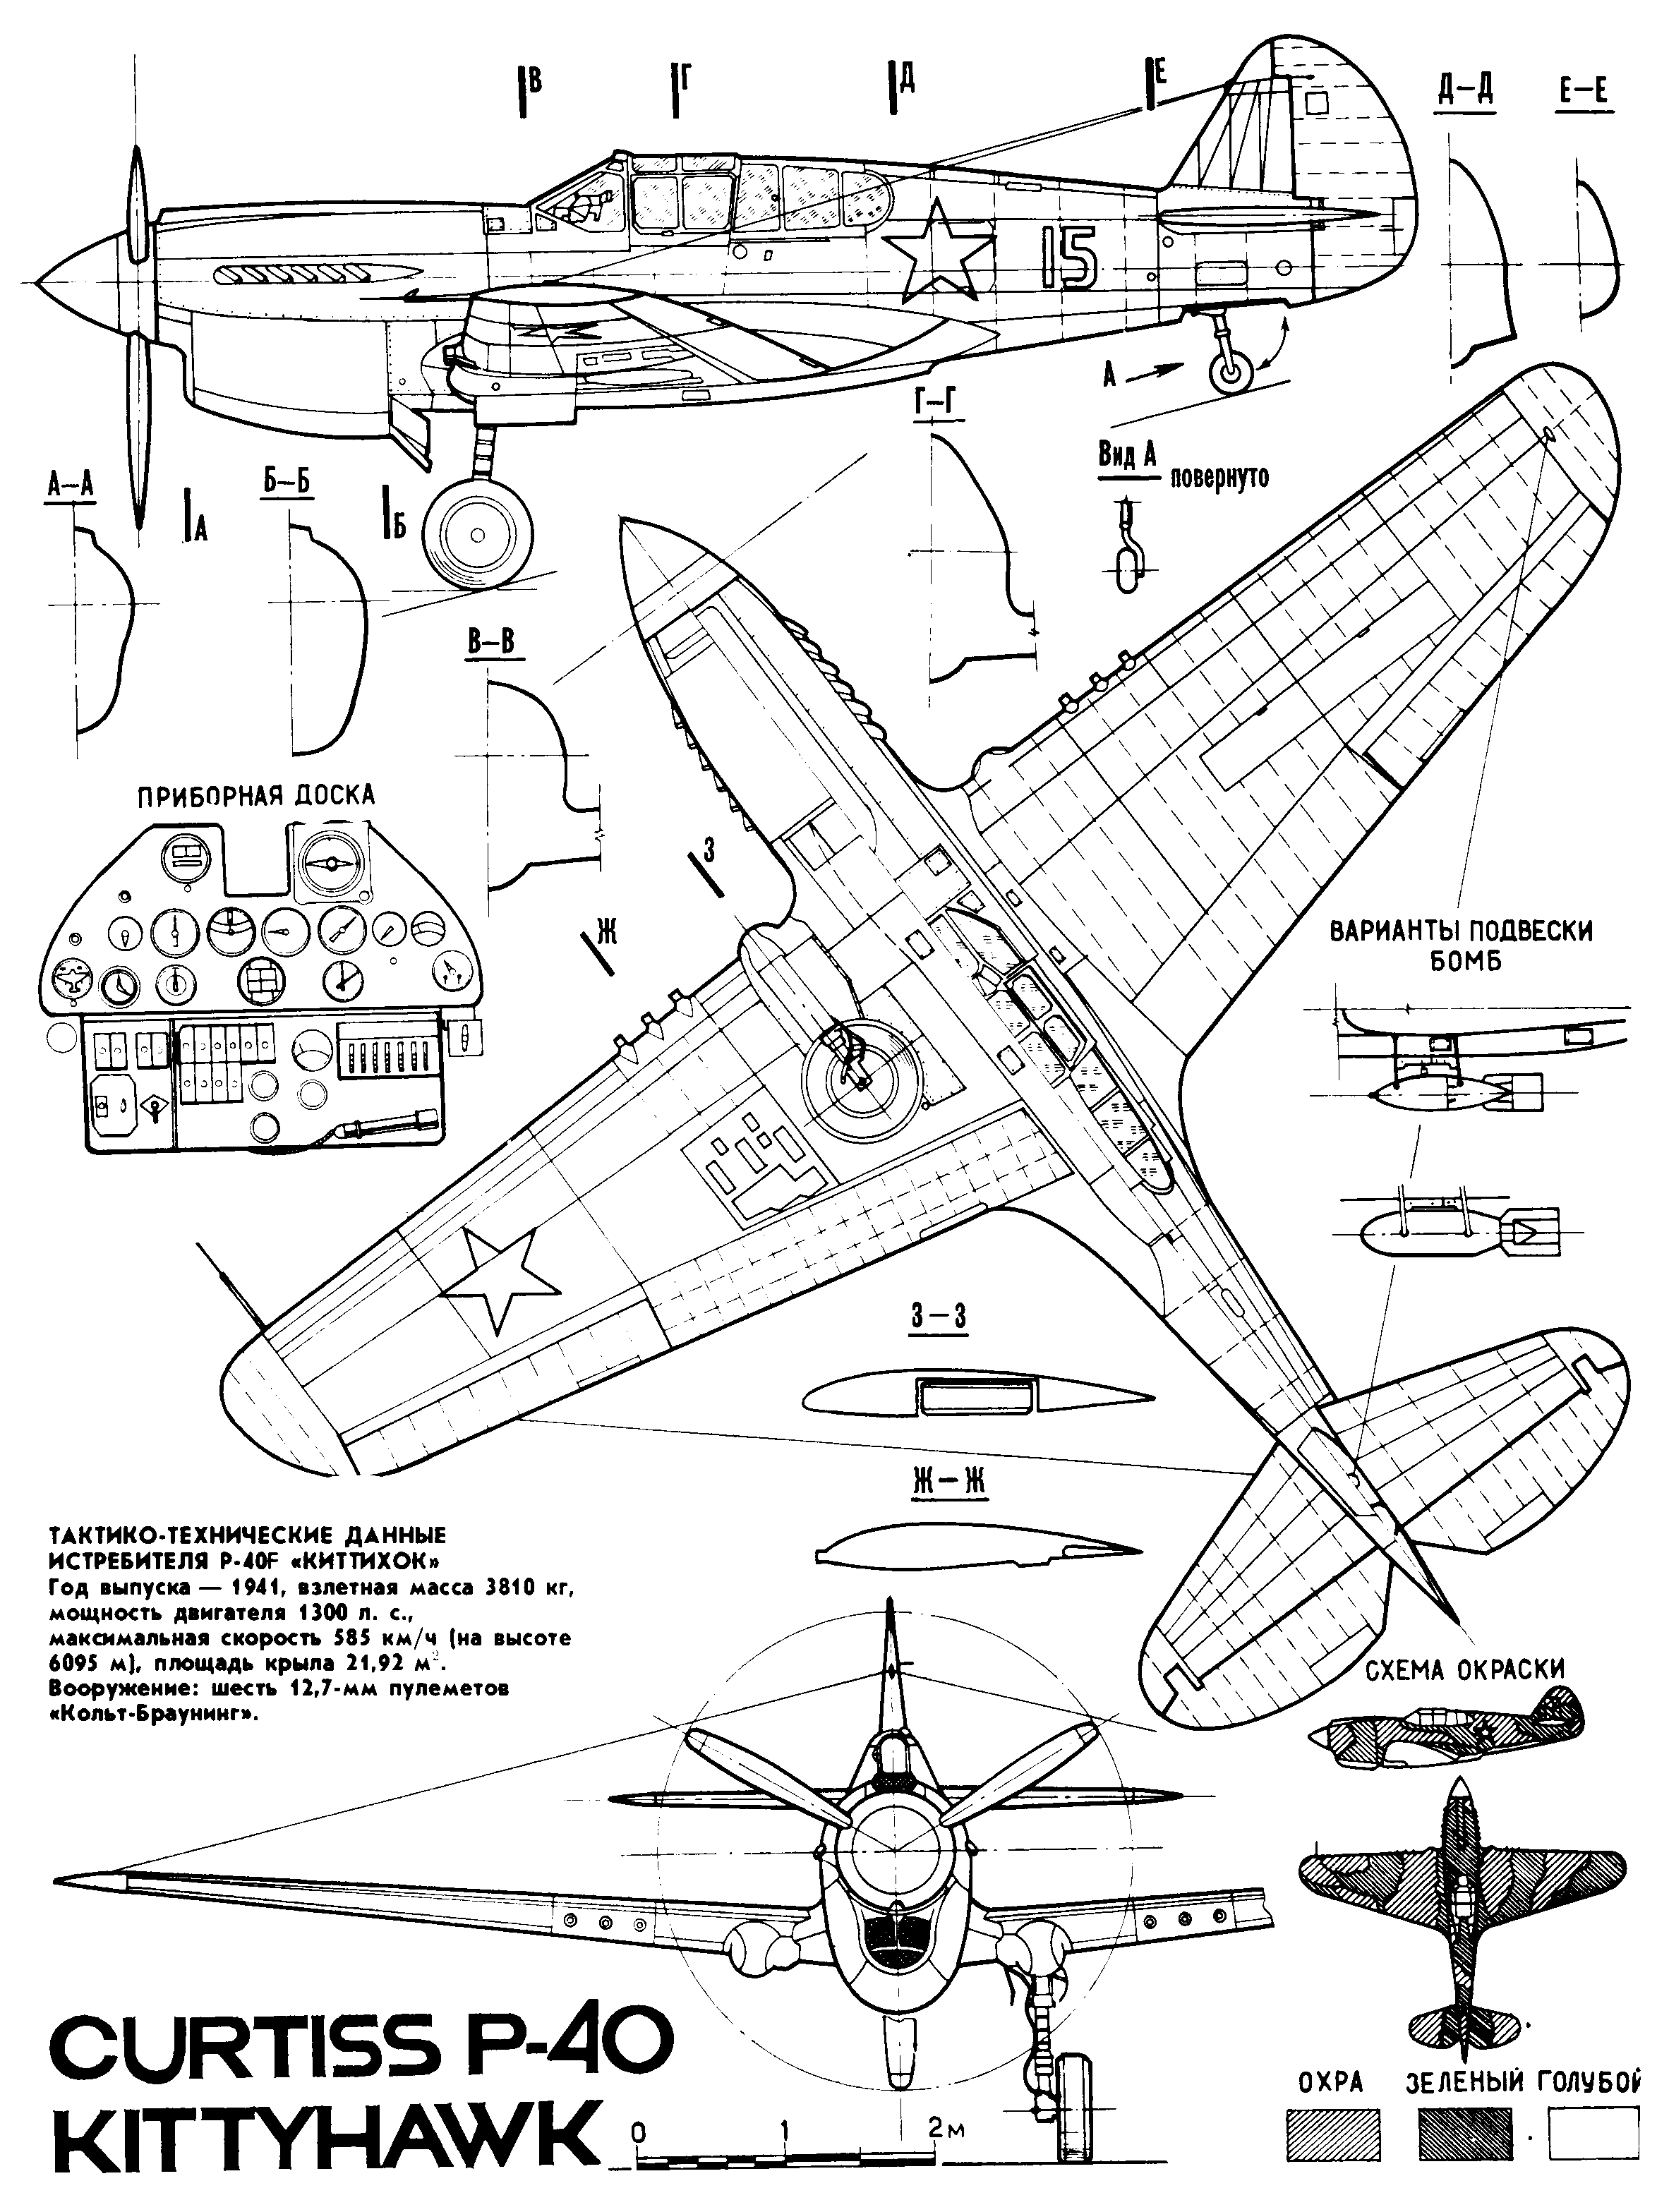 Curtiss P-40 Warhawk blueprint